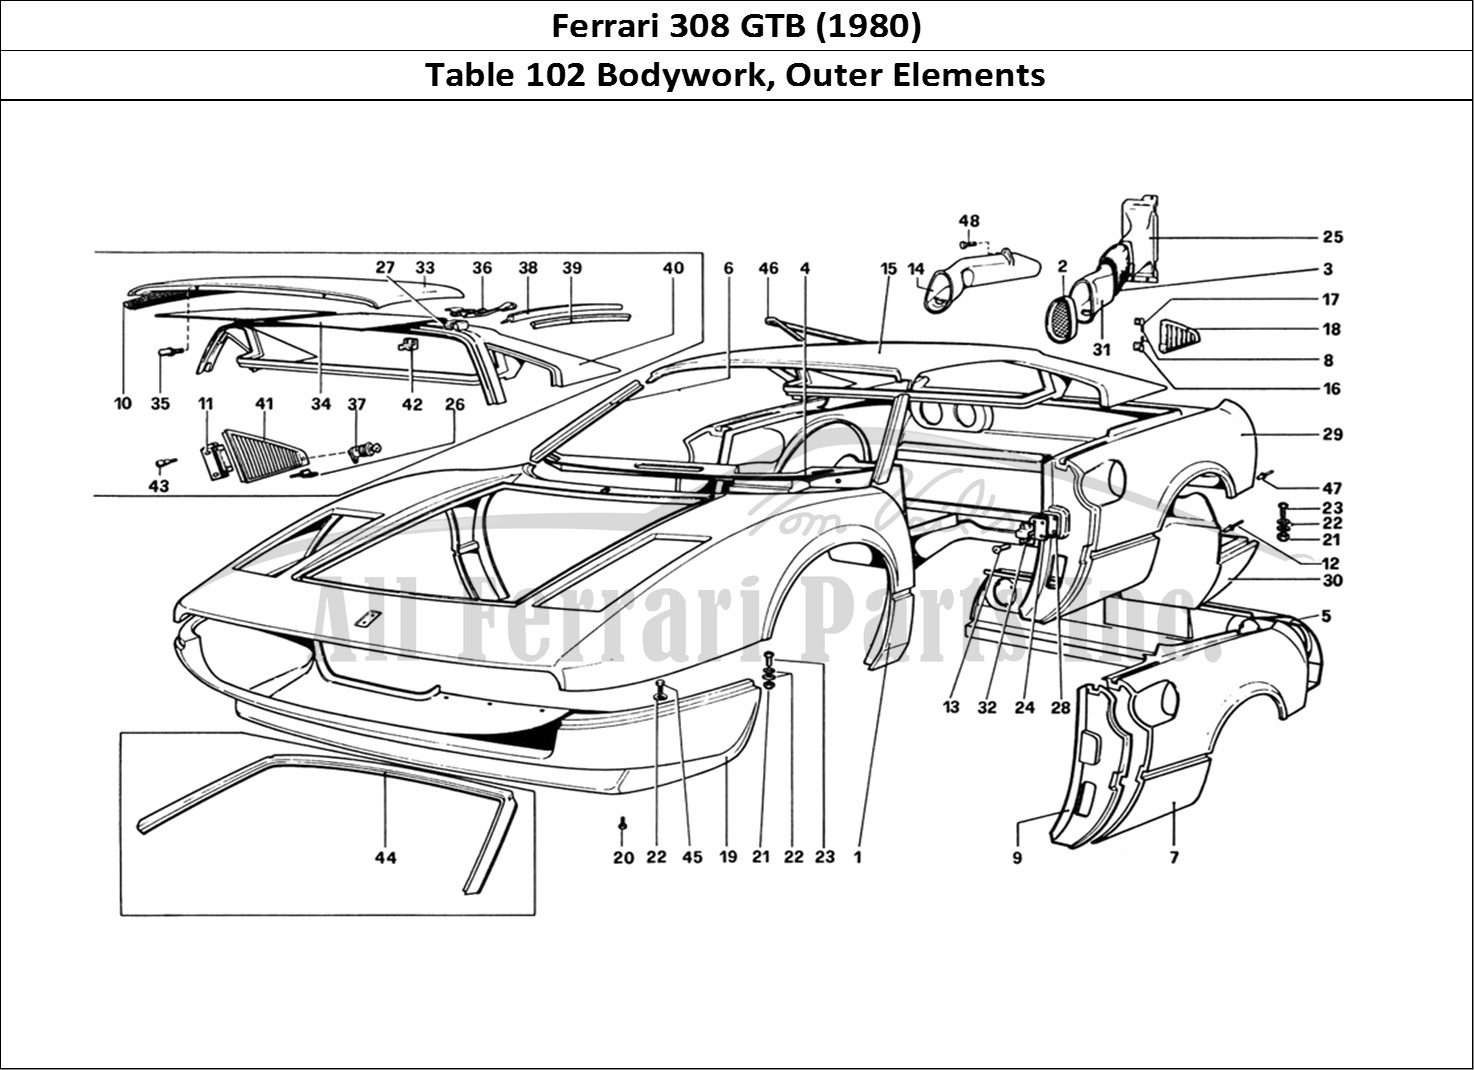 Ferrari Parts Ferrari 308 GTB (1980) Page 102 Body Shell - Outer Elemen